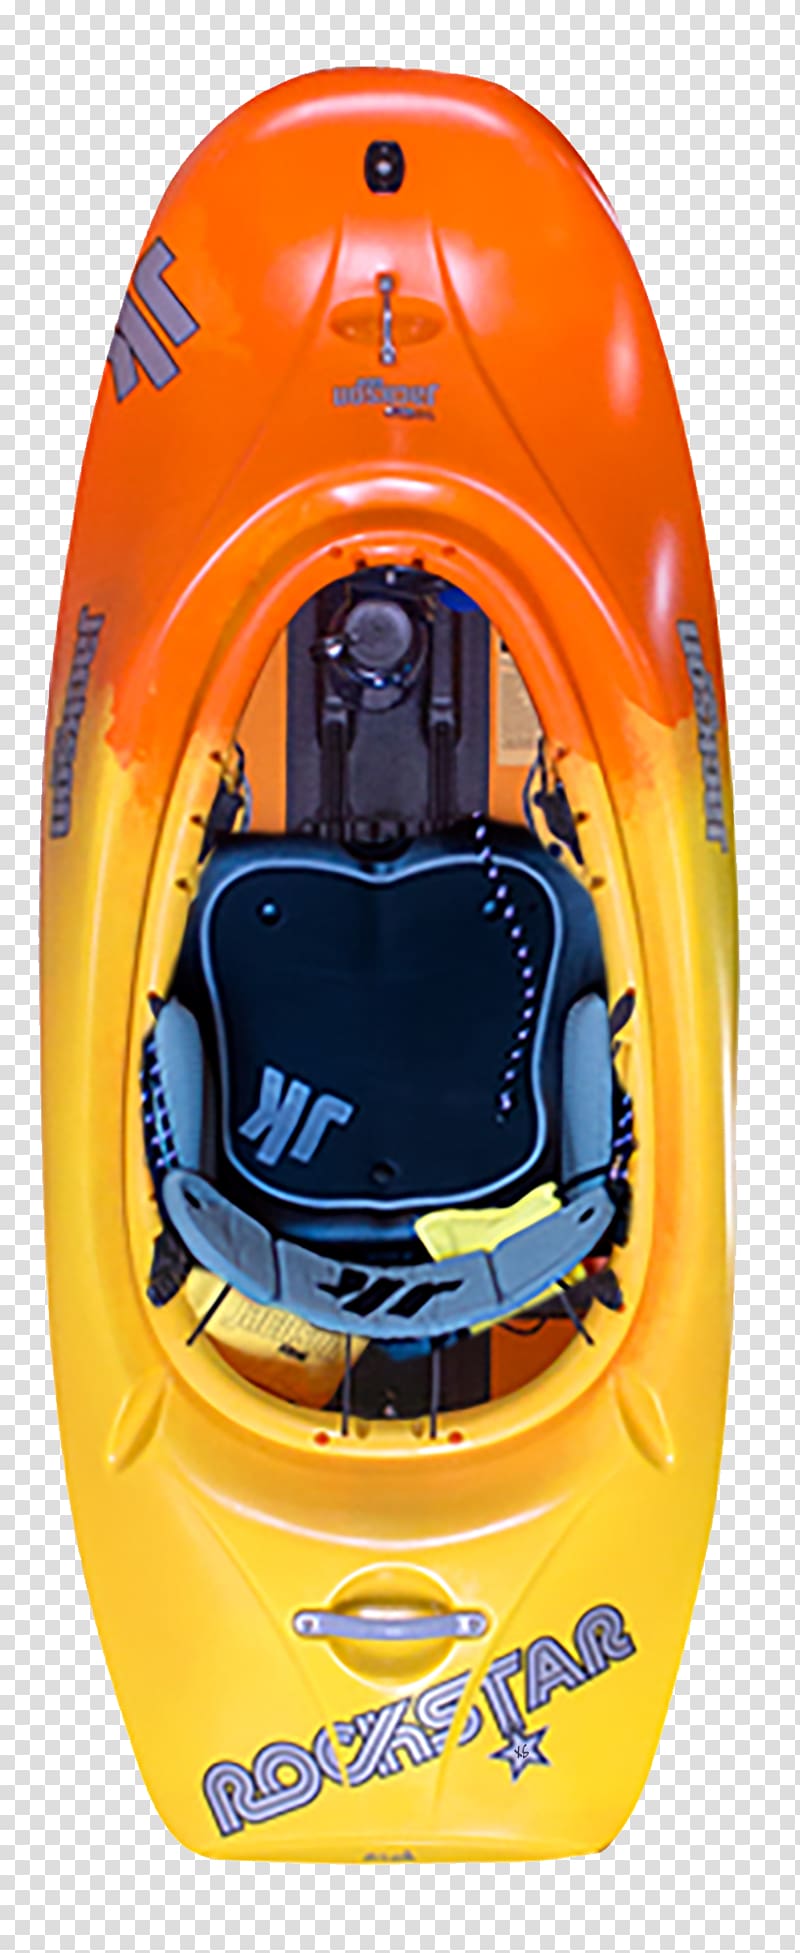 Motorcycle Helmets Jackson Kayak, Inc. Playboating Canoe, motorcycle helmets transparent background PNG clipart